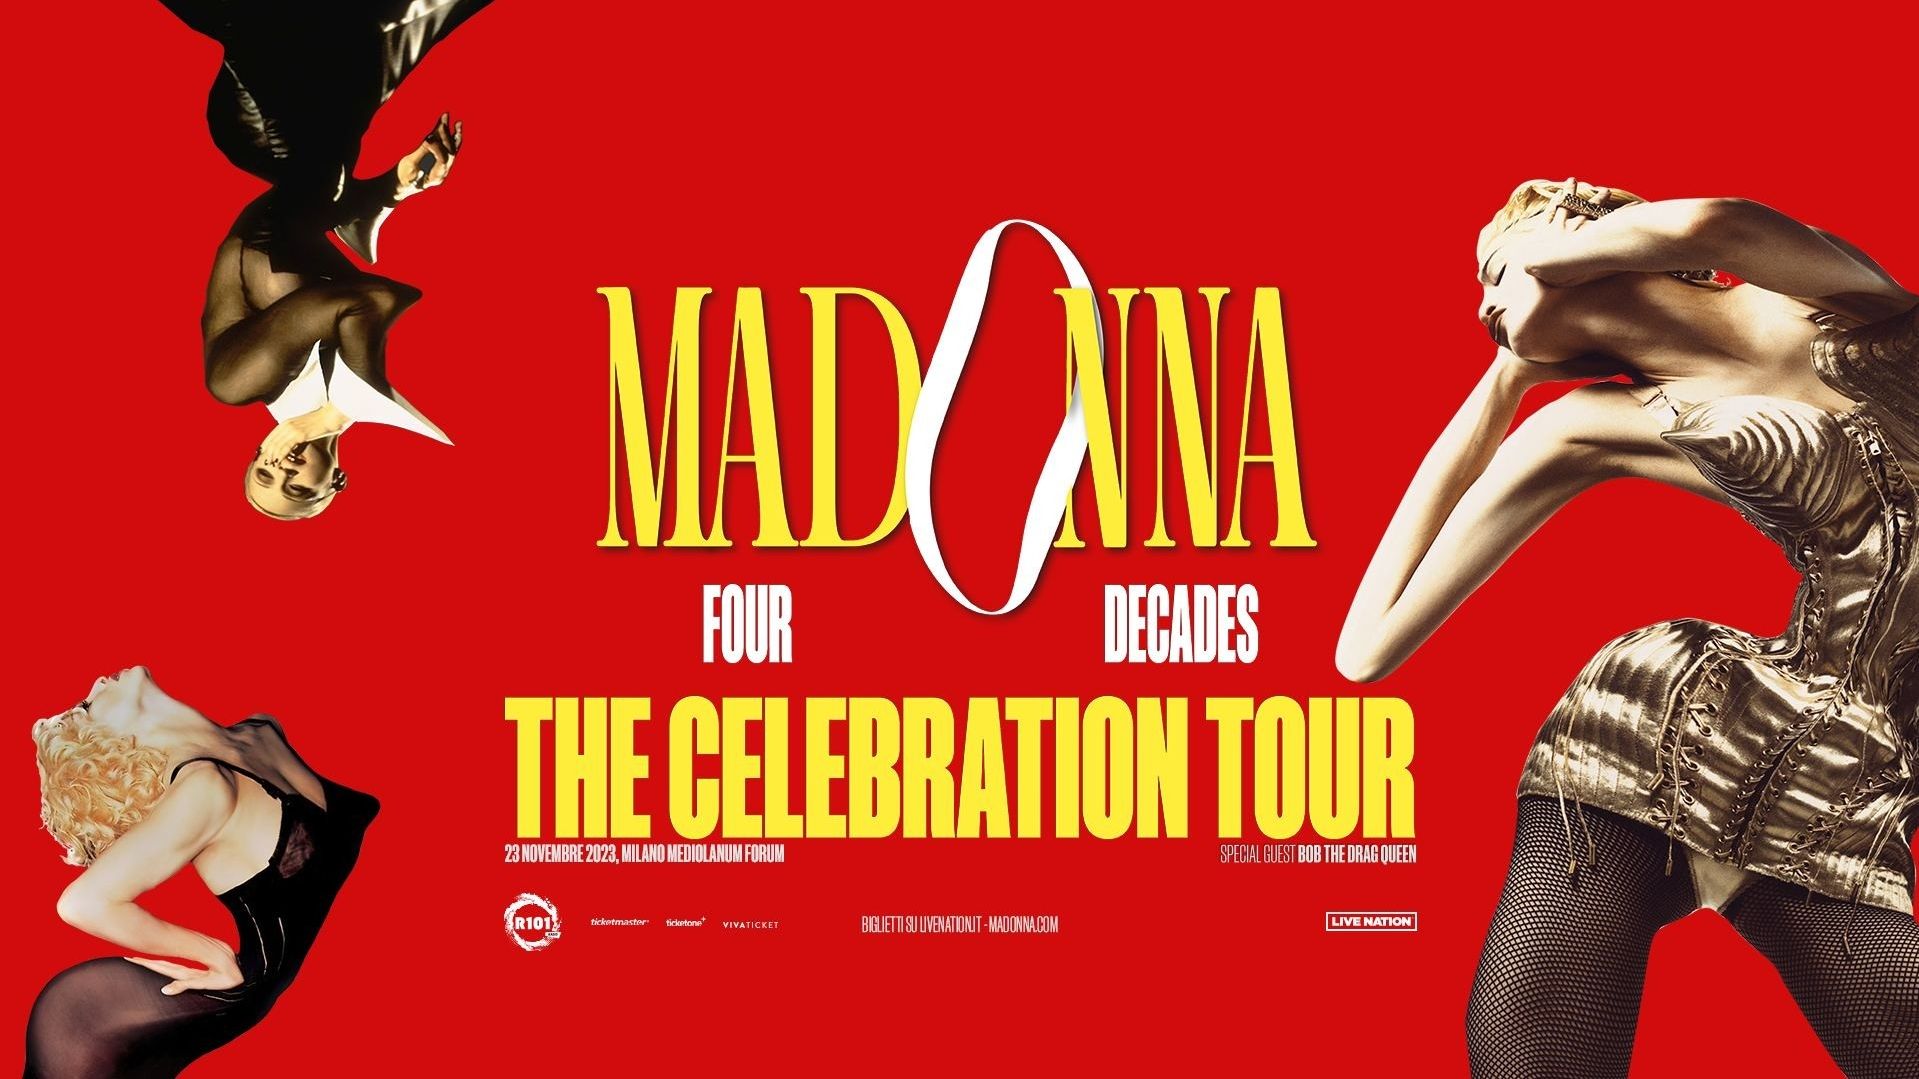 Madonna - "The Celebration Tour"